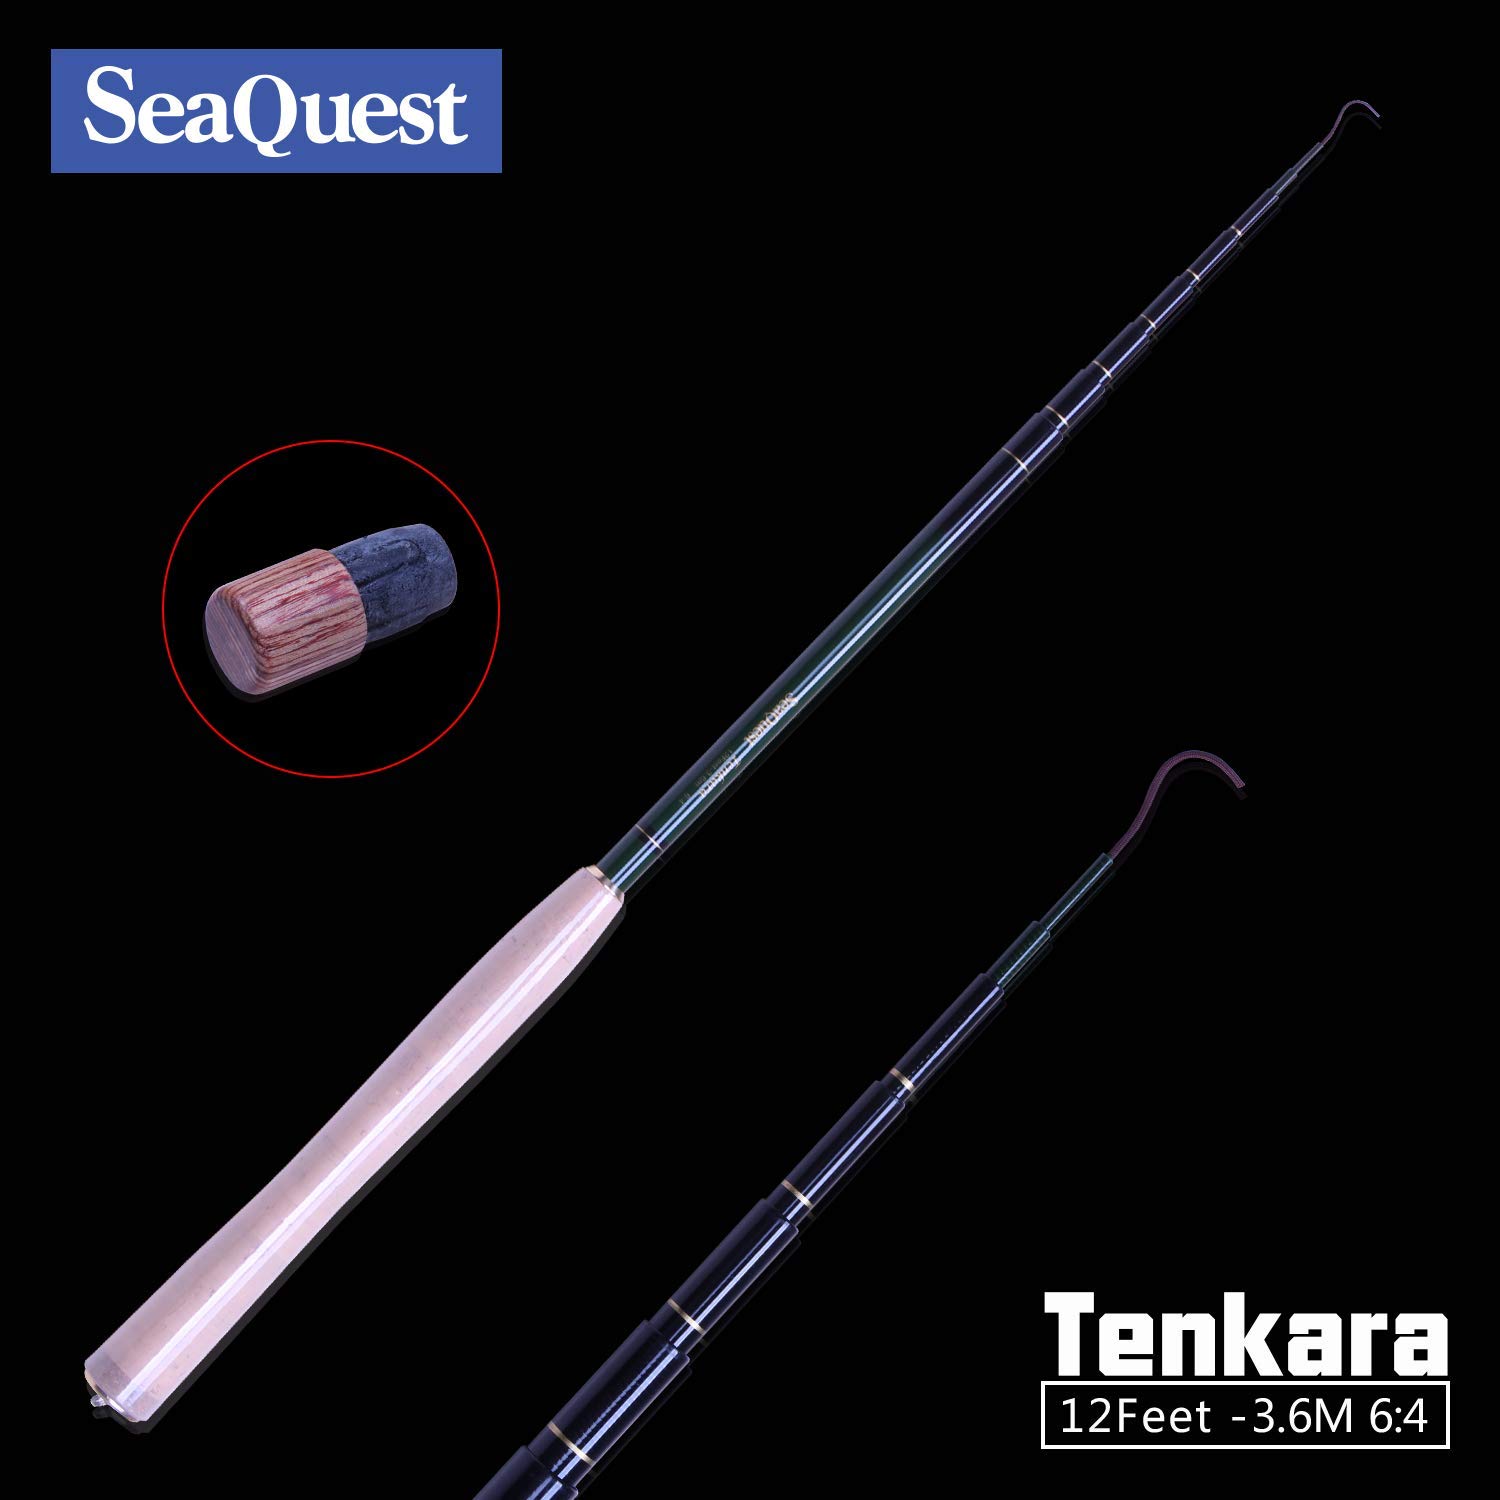 SeaQuest Tenkara 6:4 12ft Canna da Pesca TG kit 2 12Ft 6:4